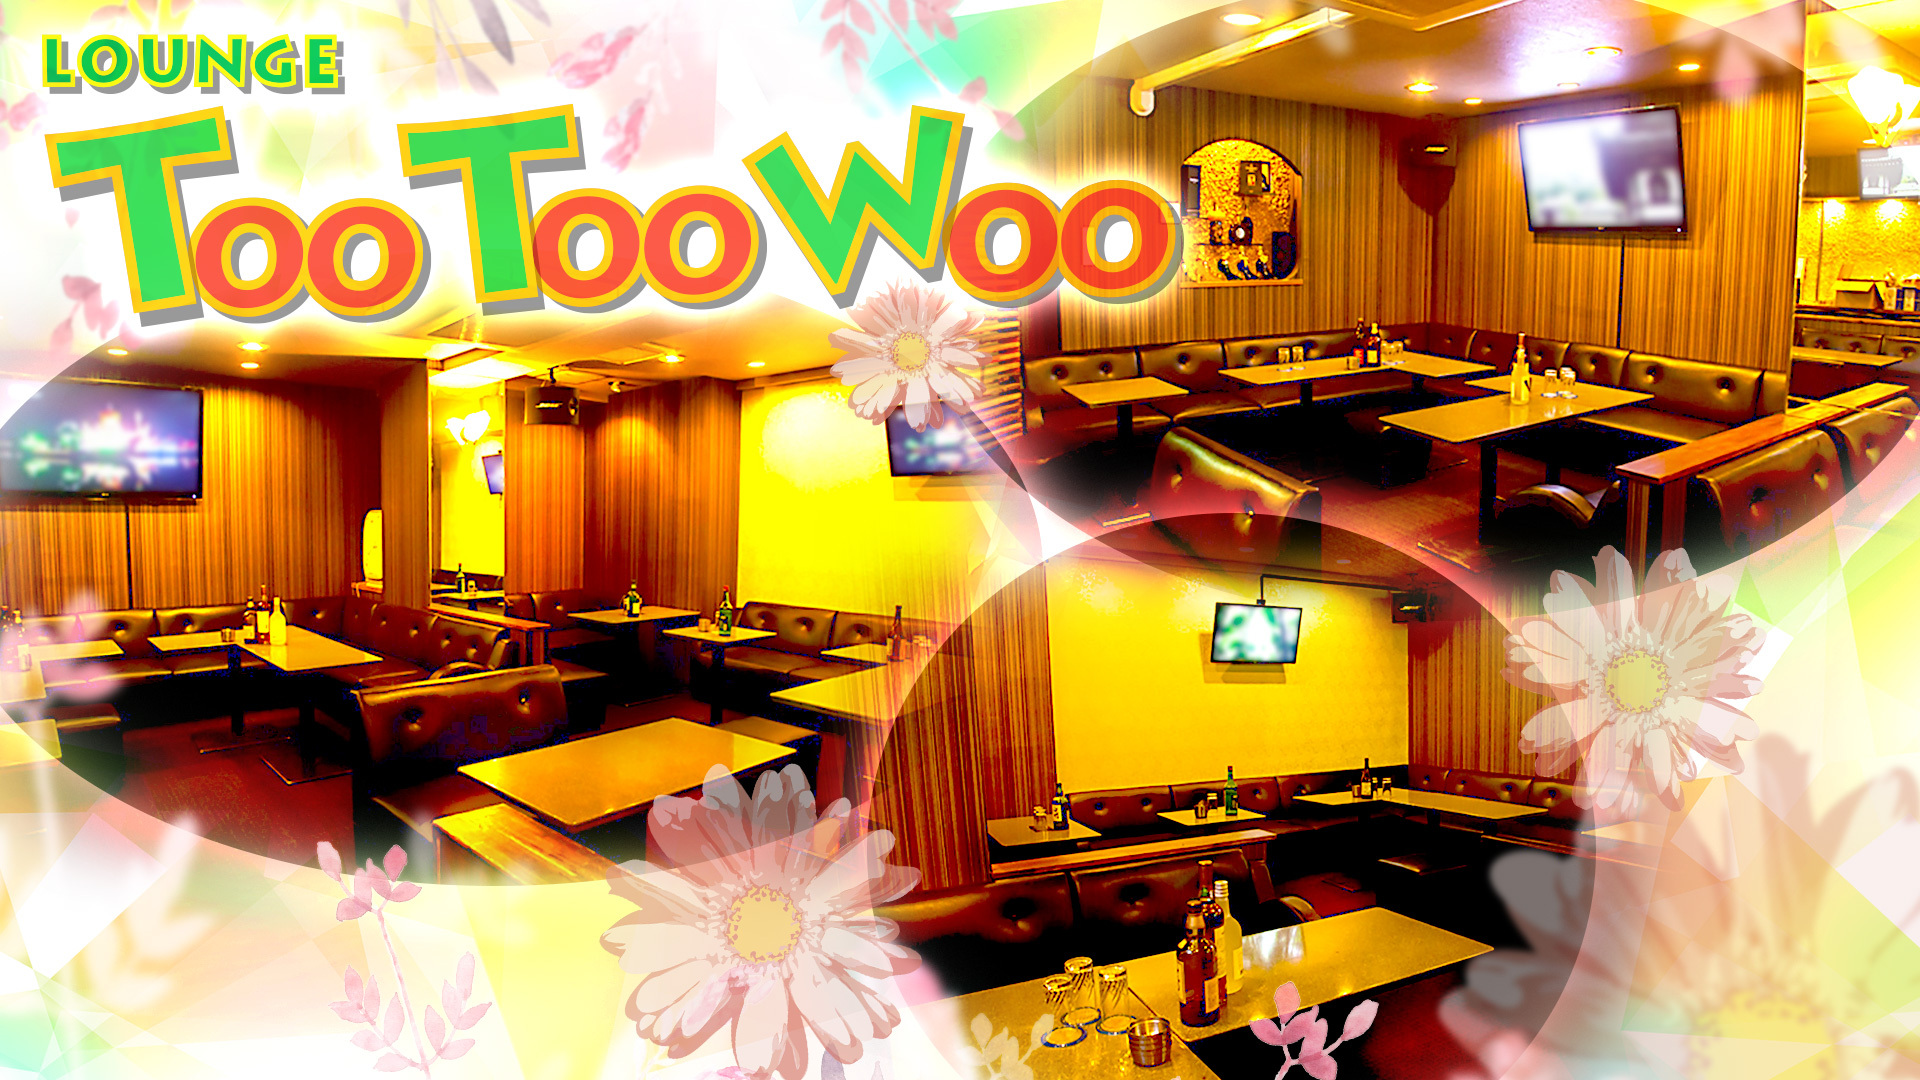 Lounge Too Too Woo ティーティーウー 立川市錦町 ラウンジ ナイトスタイル